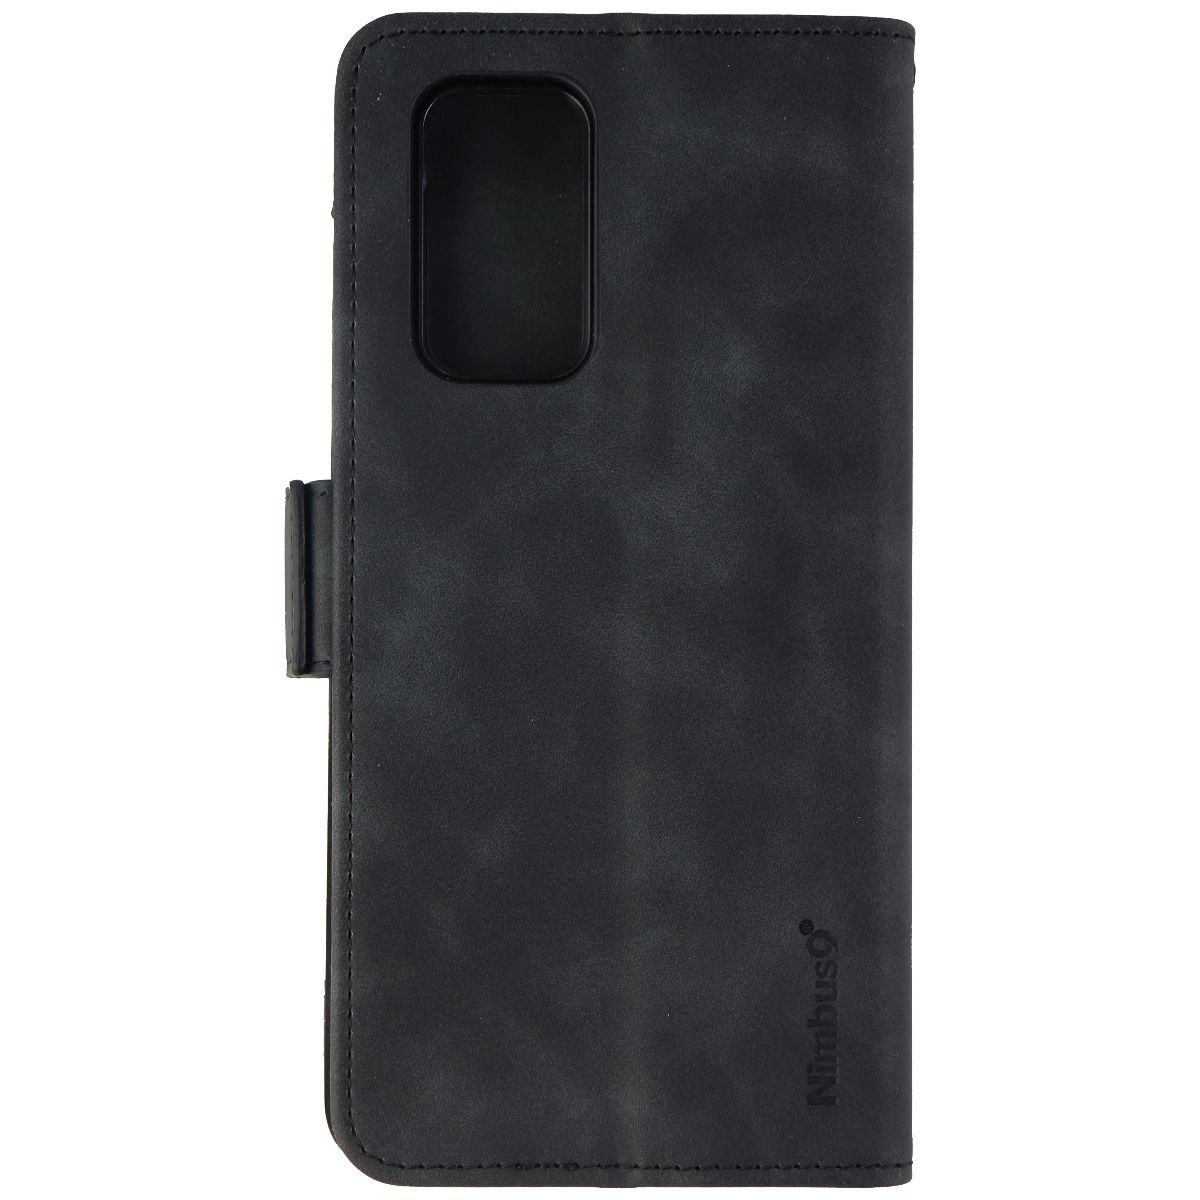 Nimbus9 Folio Wallet Hard Case For LG Wing / Wing 5G Smartphones - Black